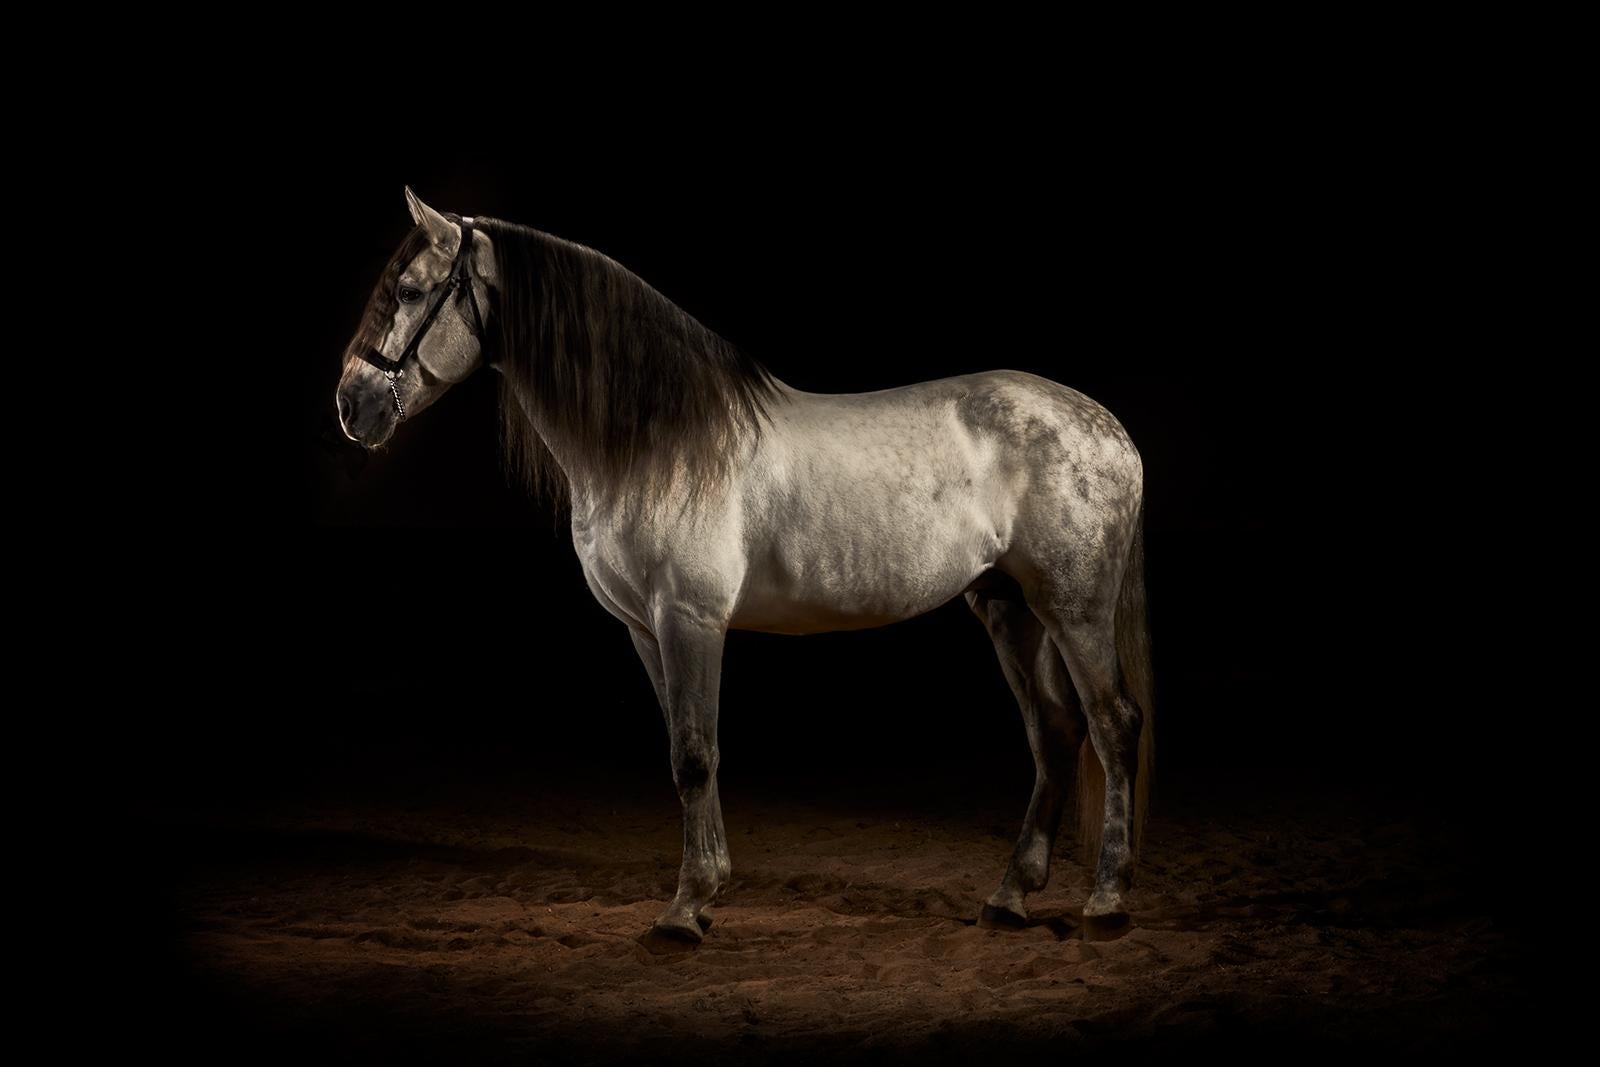 Peter Ridge Still-Life Photograph - Horse 2- Signed limited edition animal contemporary print, still life, Black